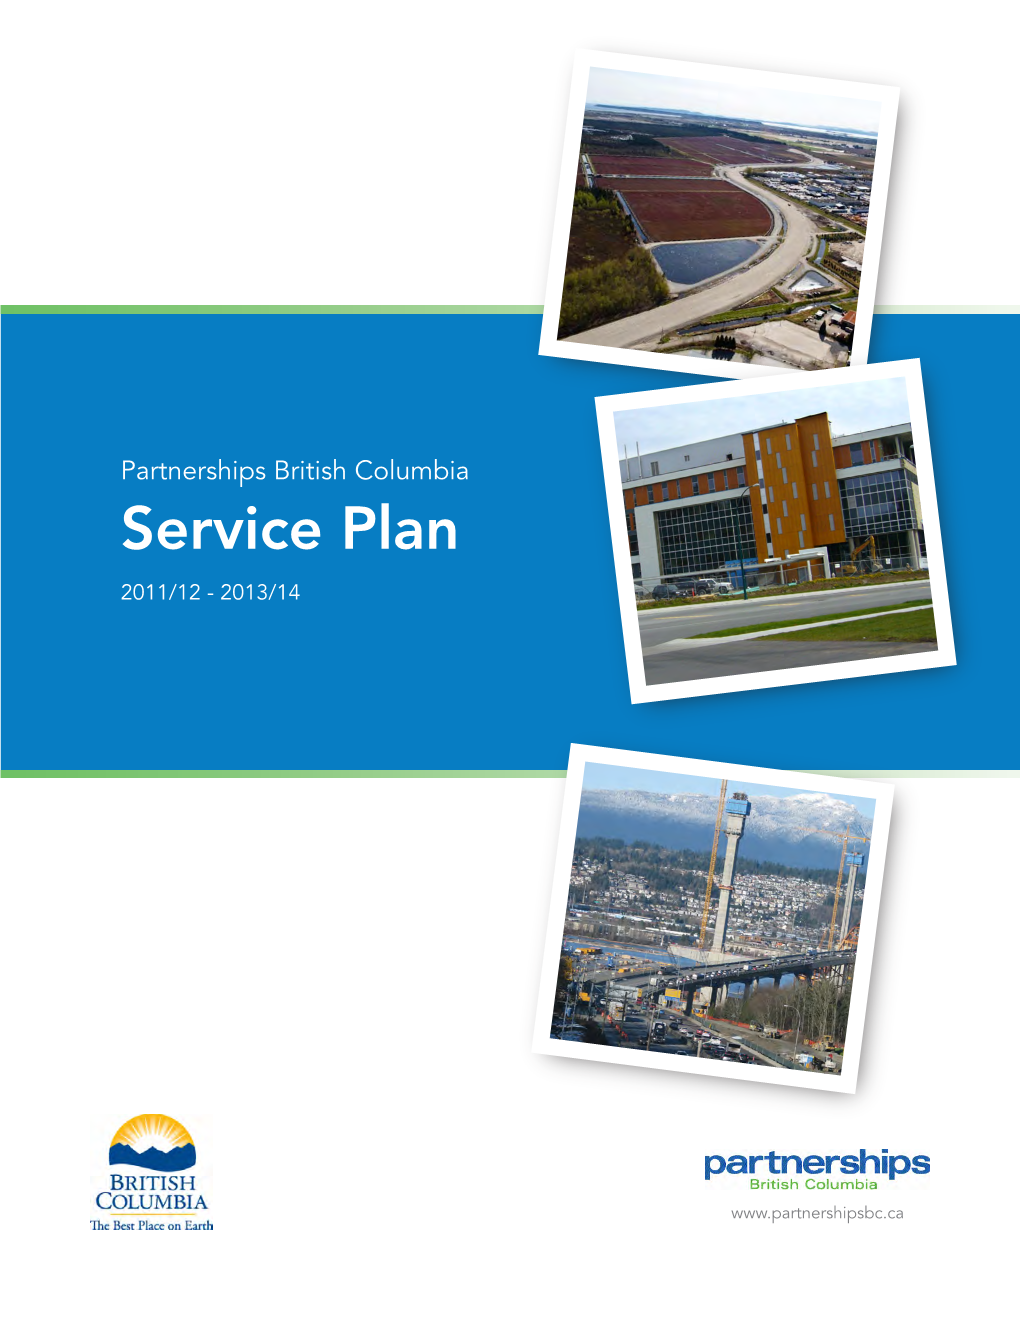 Partnerships British Columbia Service Plan, 2011/12